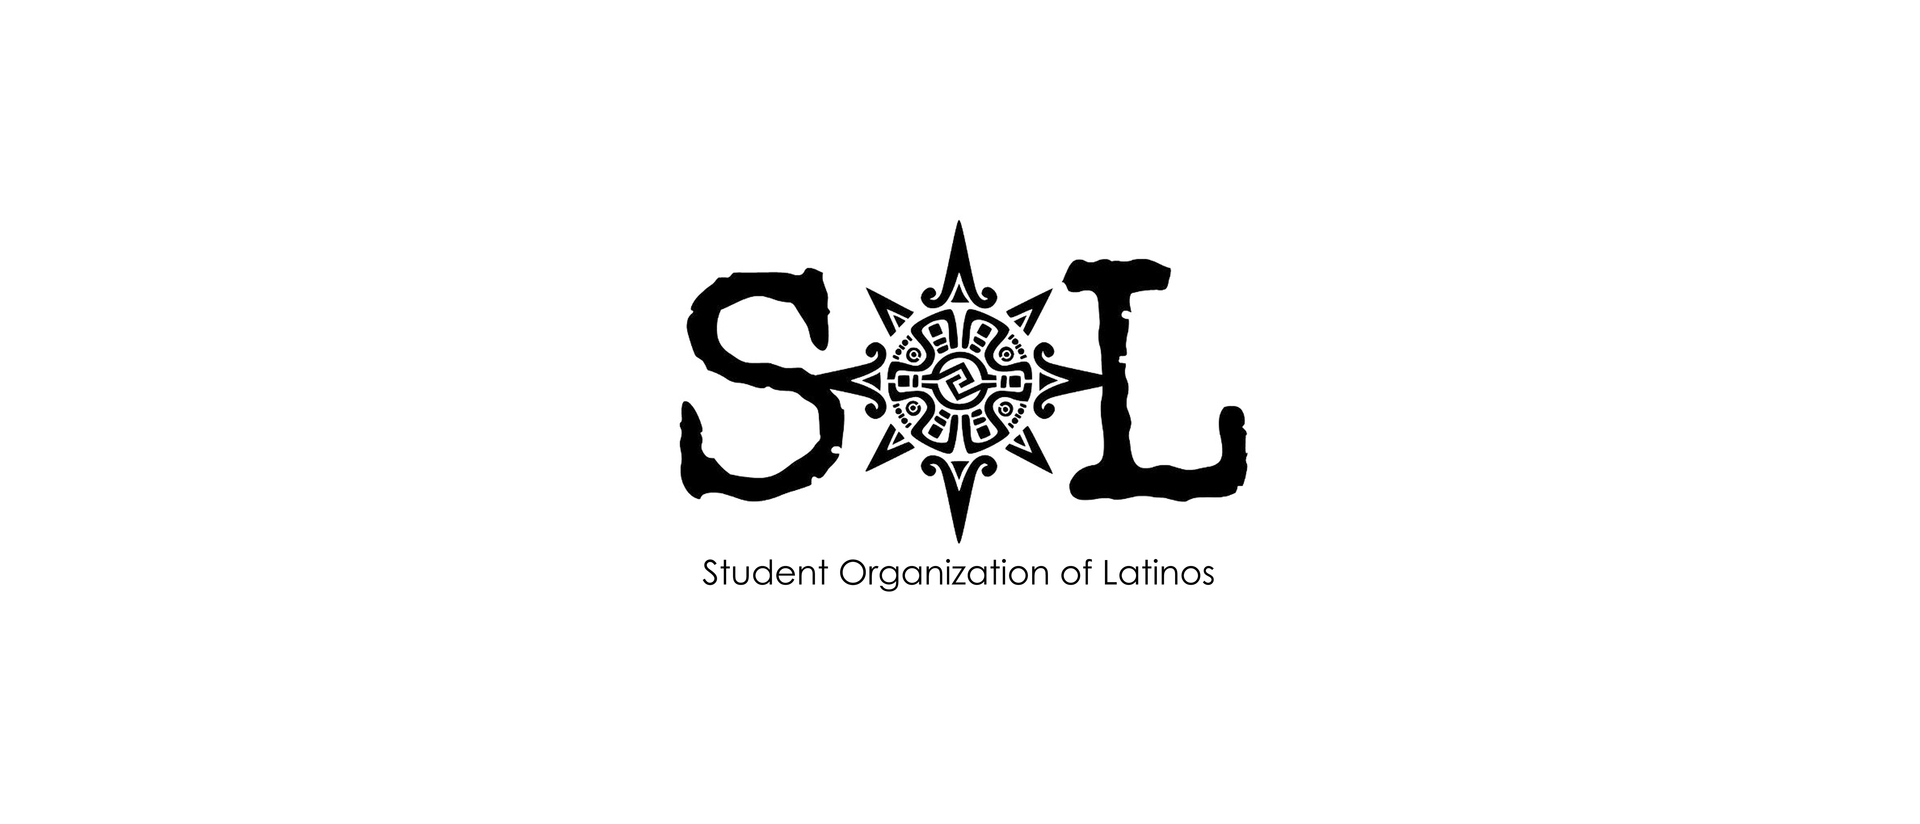 Student Organization of Latinos